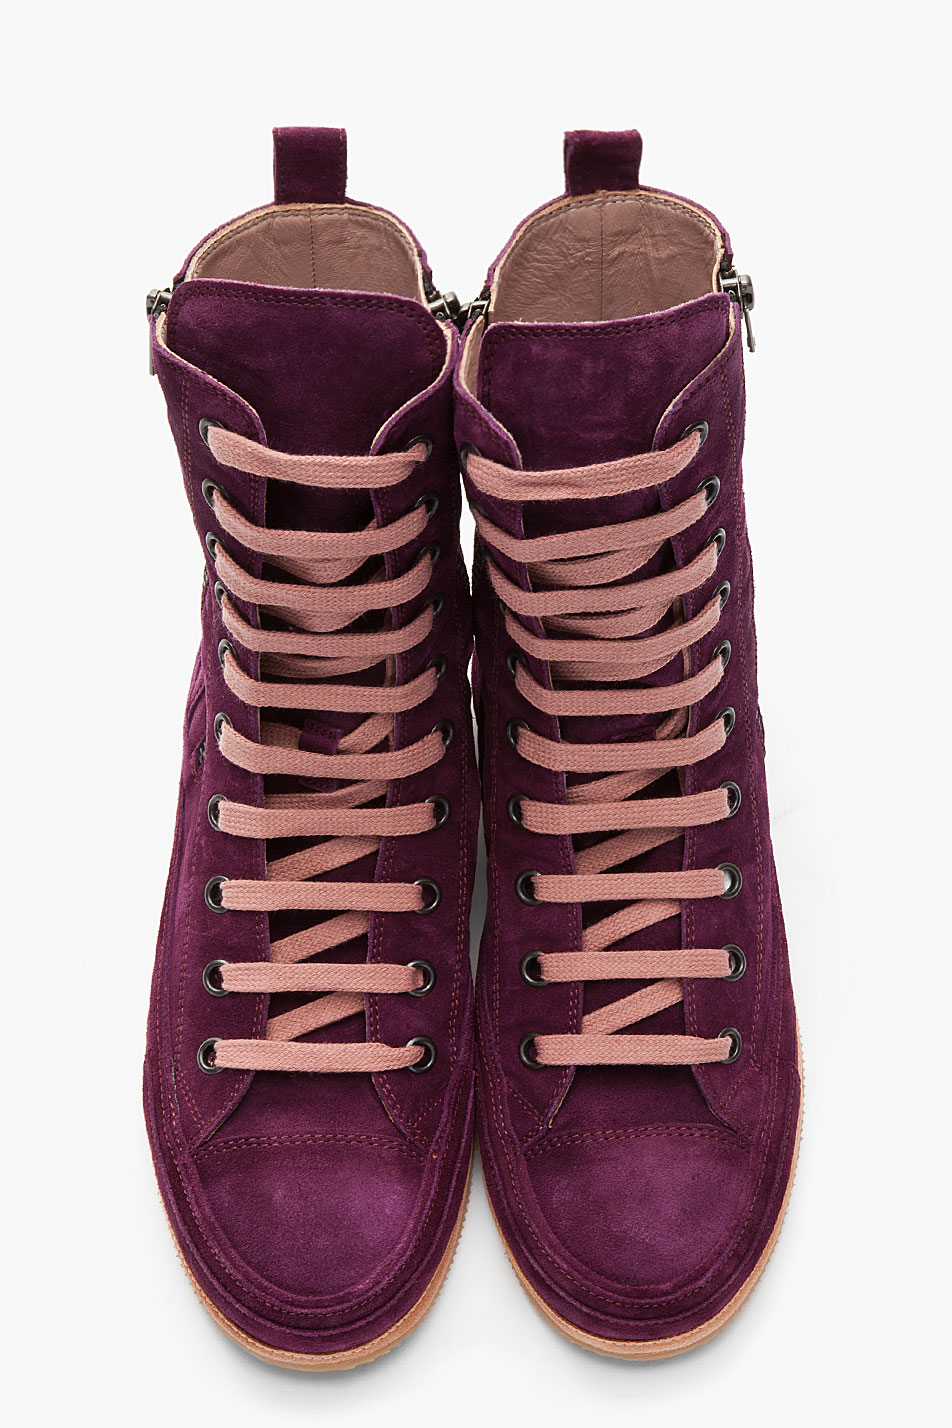 Ann Demeulemeester Vivid Purple Suede Boots in Purple for Men - Lyst